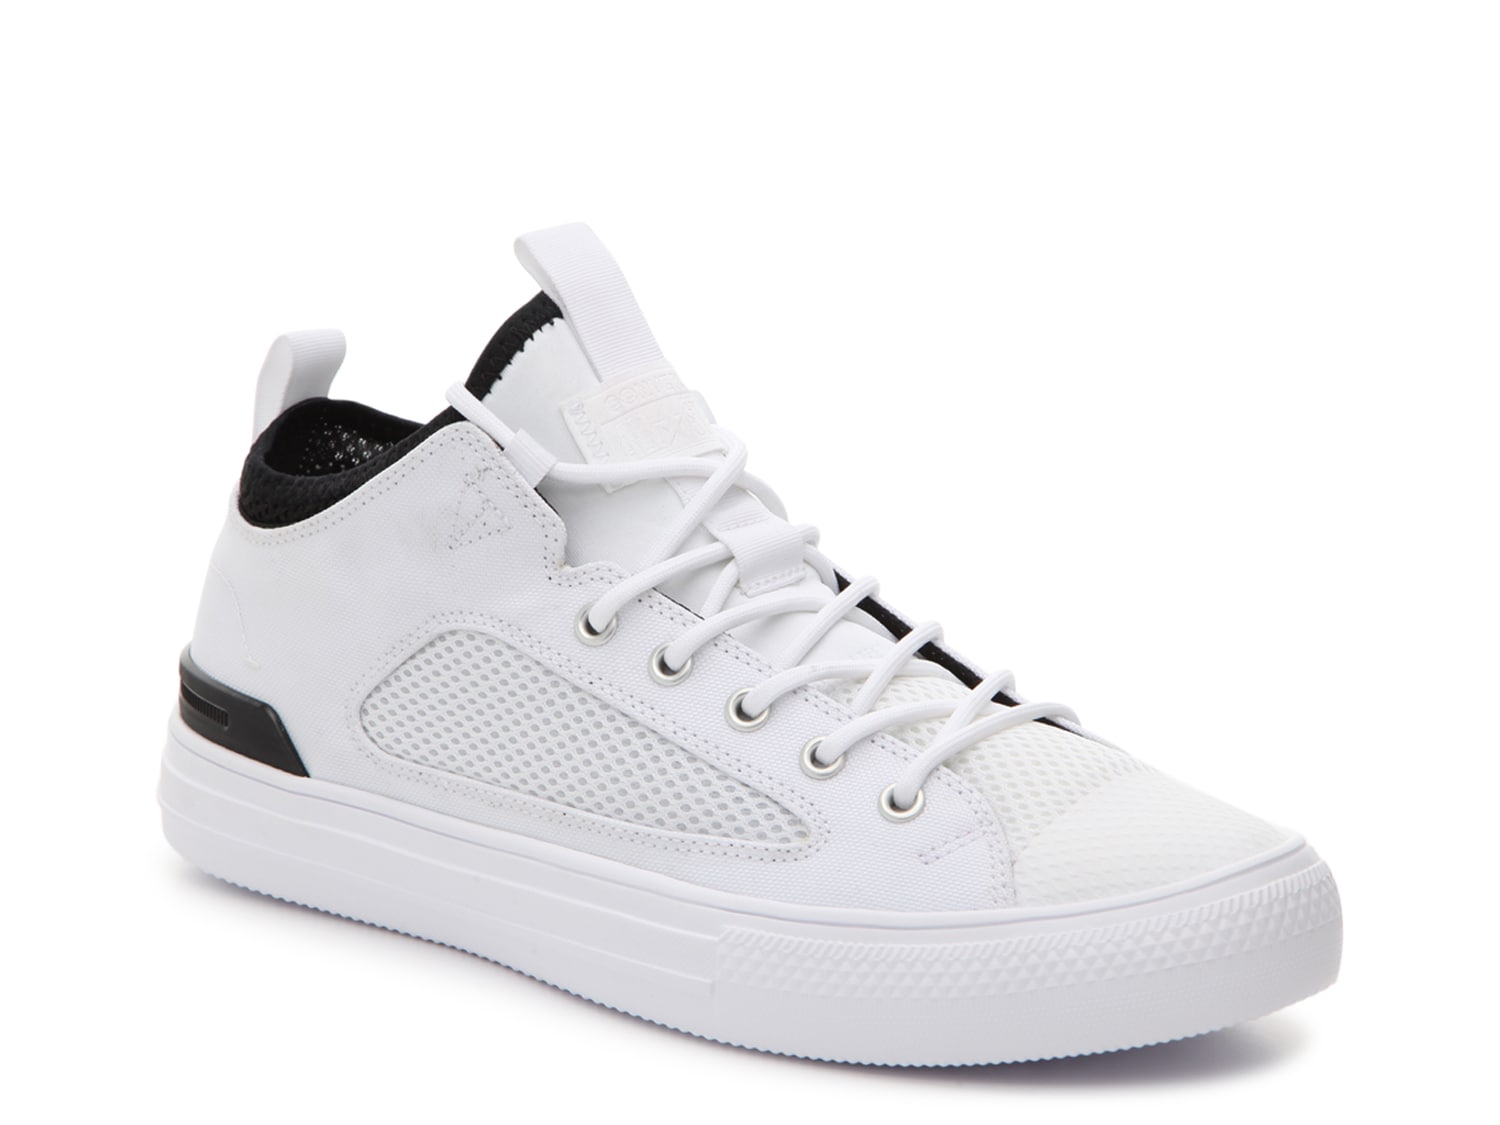 Converse Chuck Taylor Star Ultra Lite Mid-Top Sneaker - Men's - Free Shipping DSW